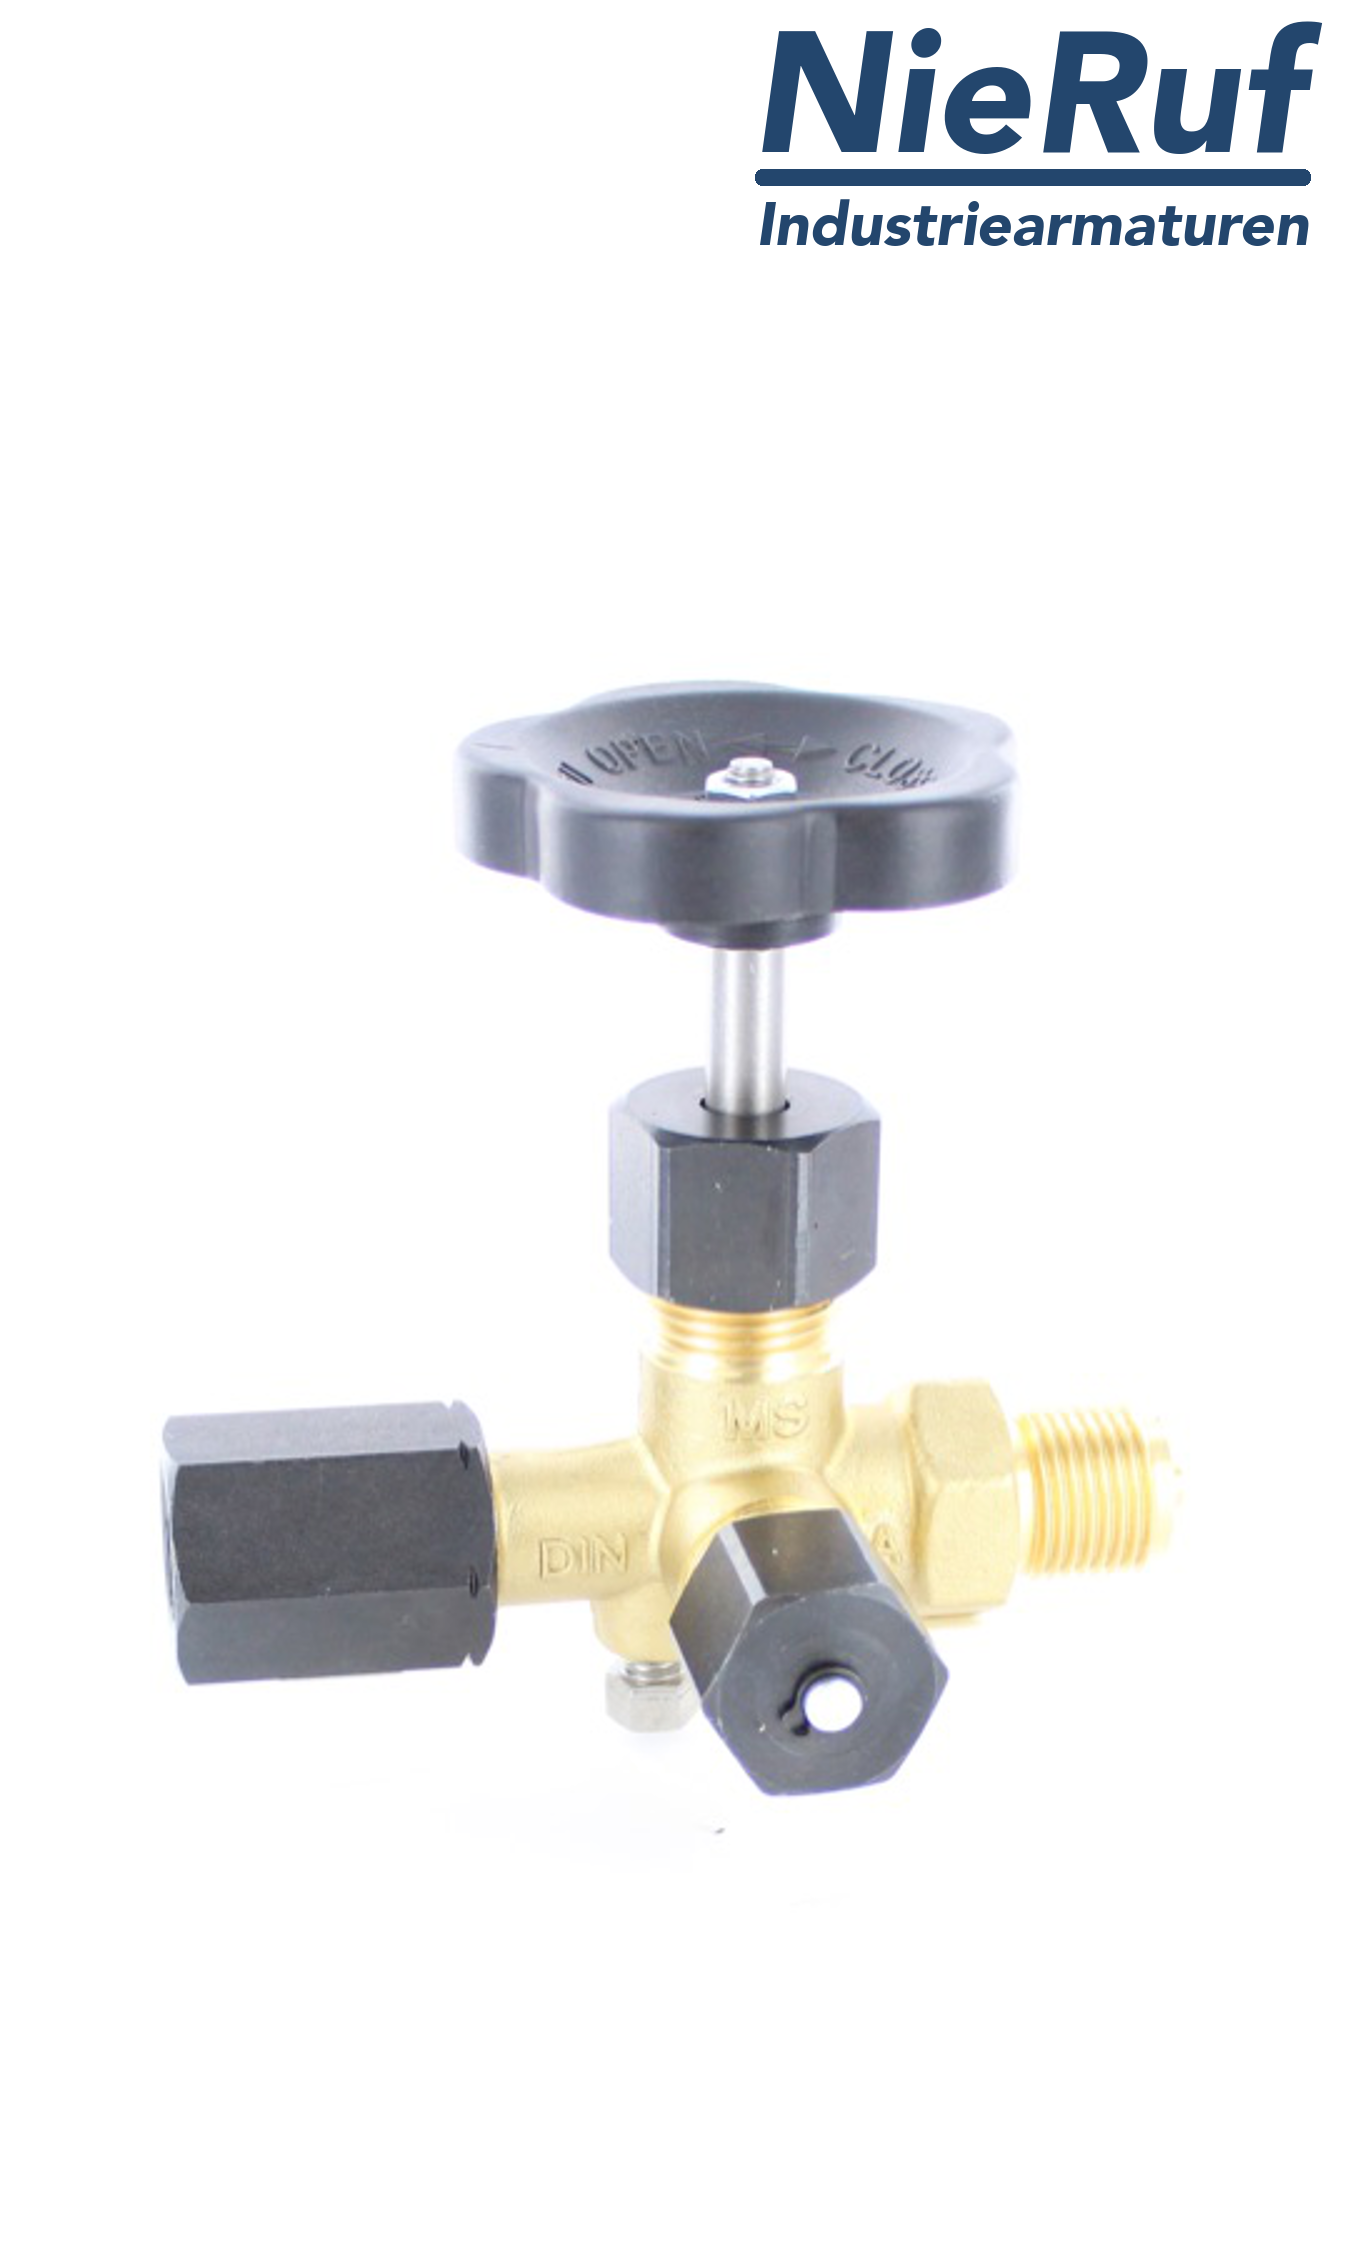 manometer gauge valves male thread x adapter for instrument holder with nut adjustable x test connector M20x1,5 DIN 16271 brass 250 bar